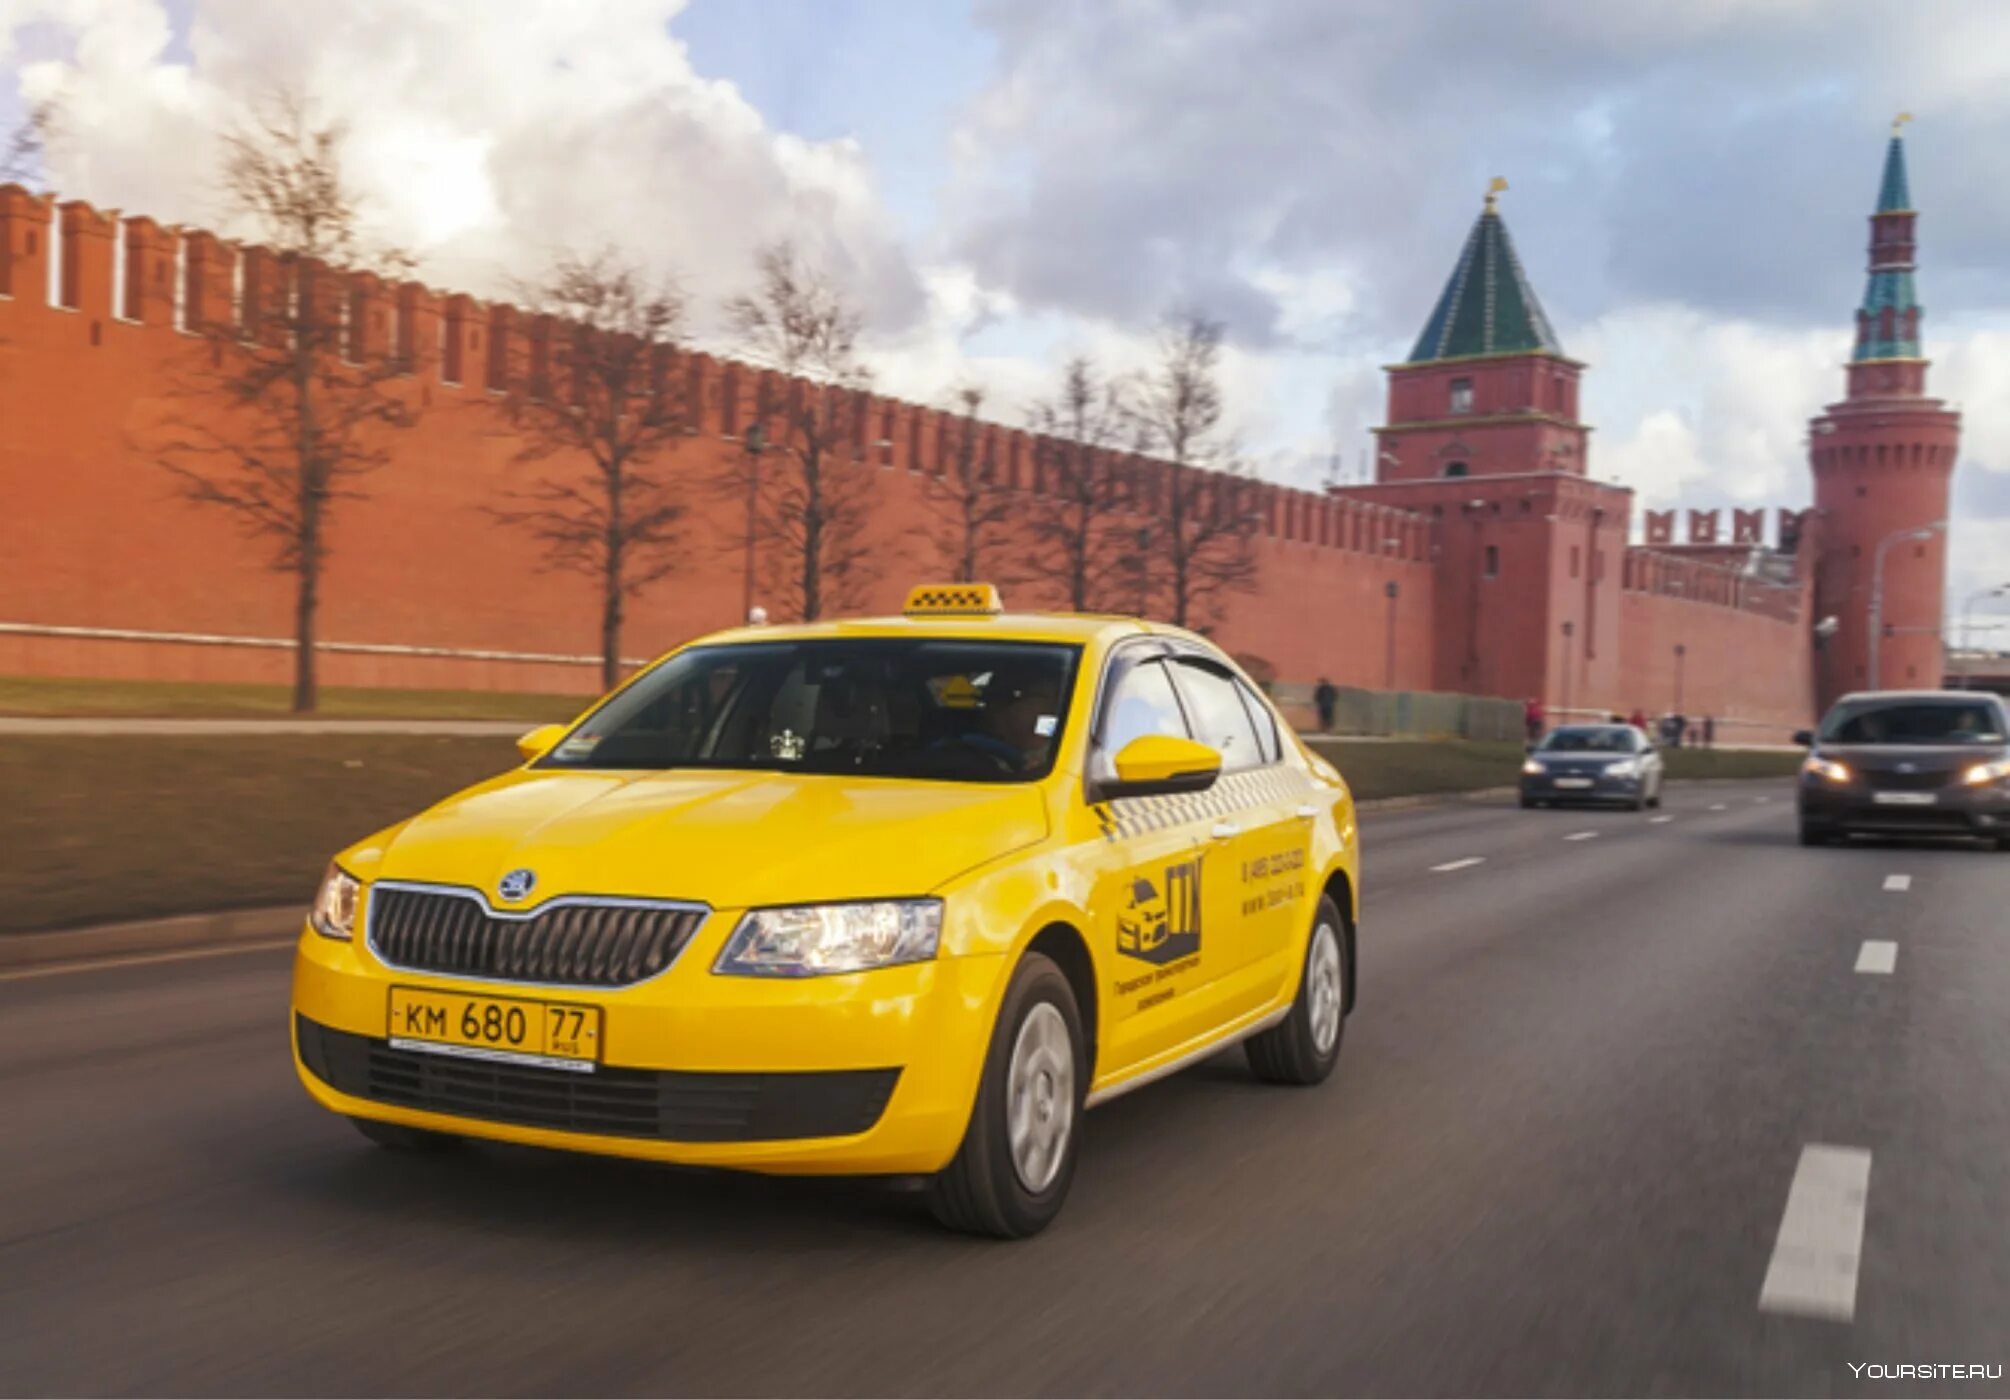 Таксопарк фото. Машина "такси". Автомобиль «такси». Такси Москва. Московское такси.